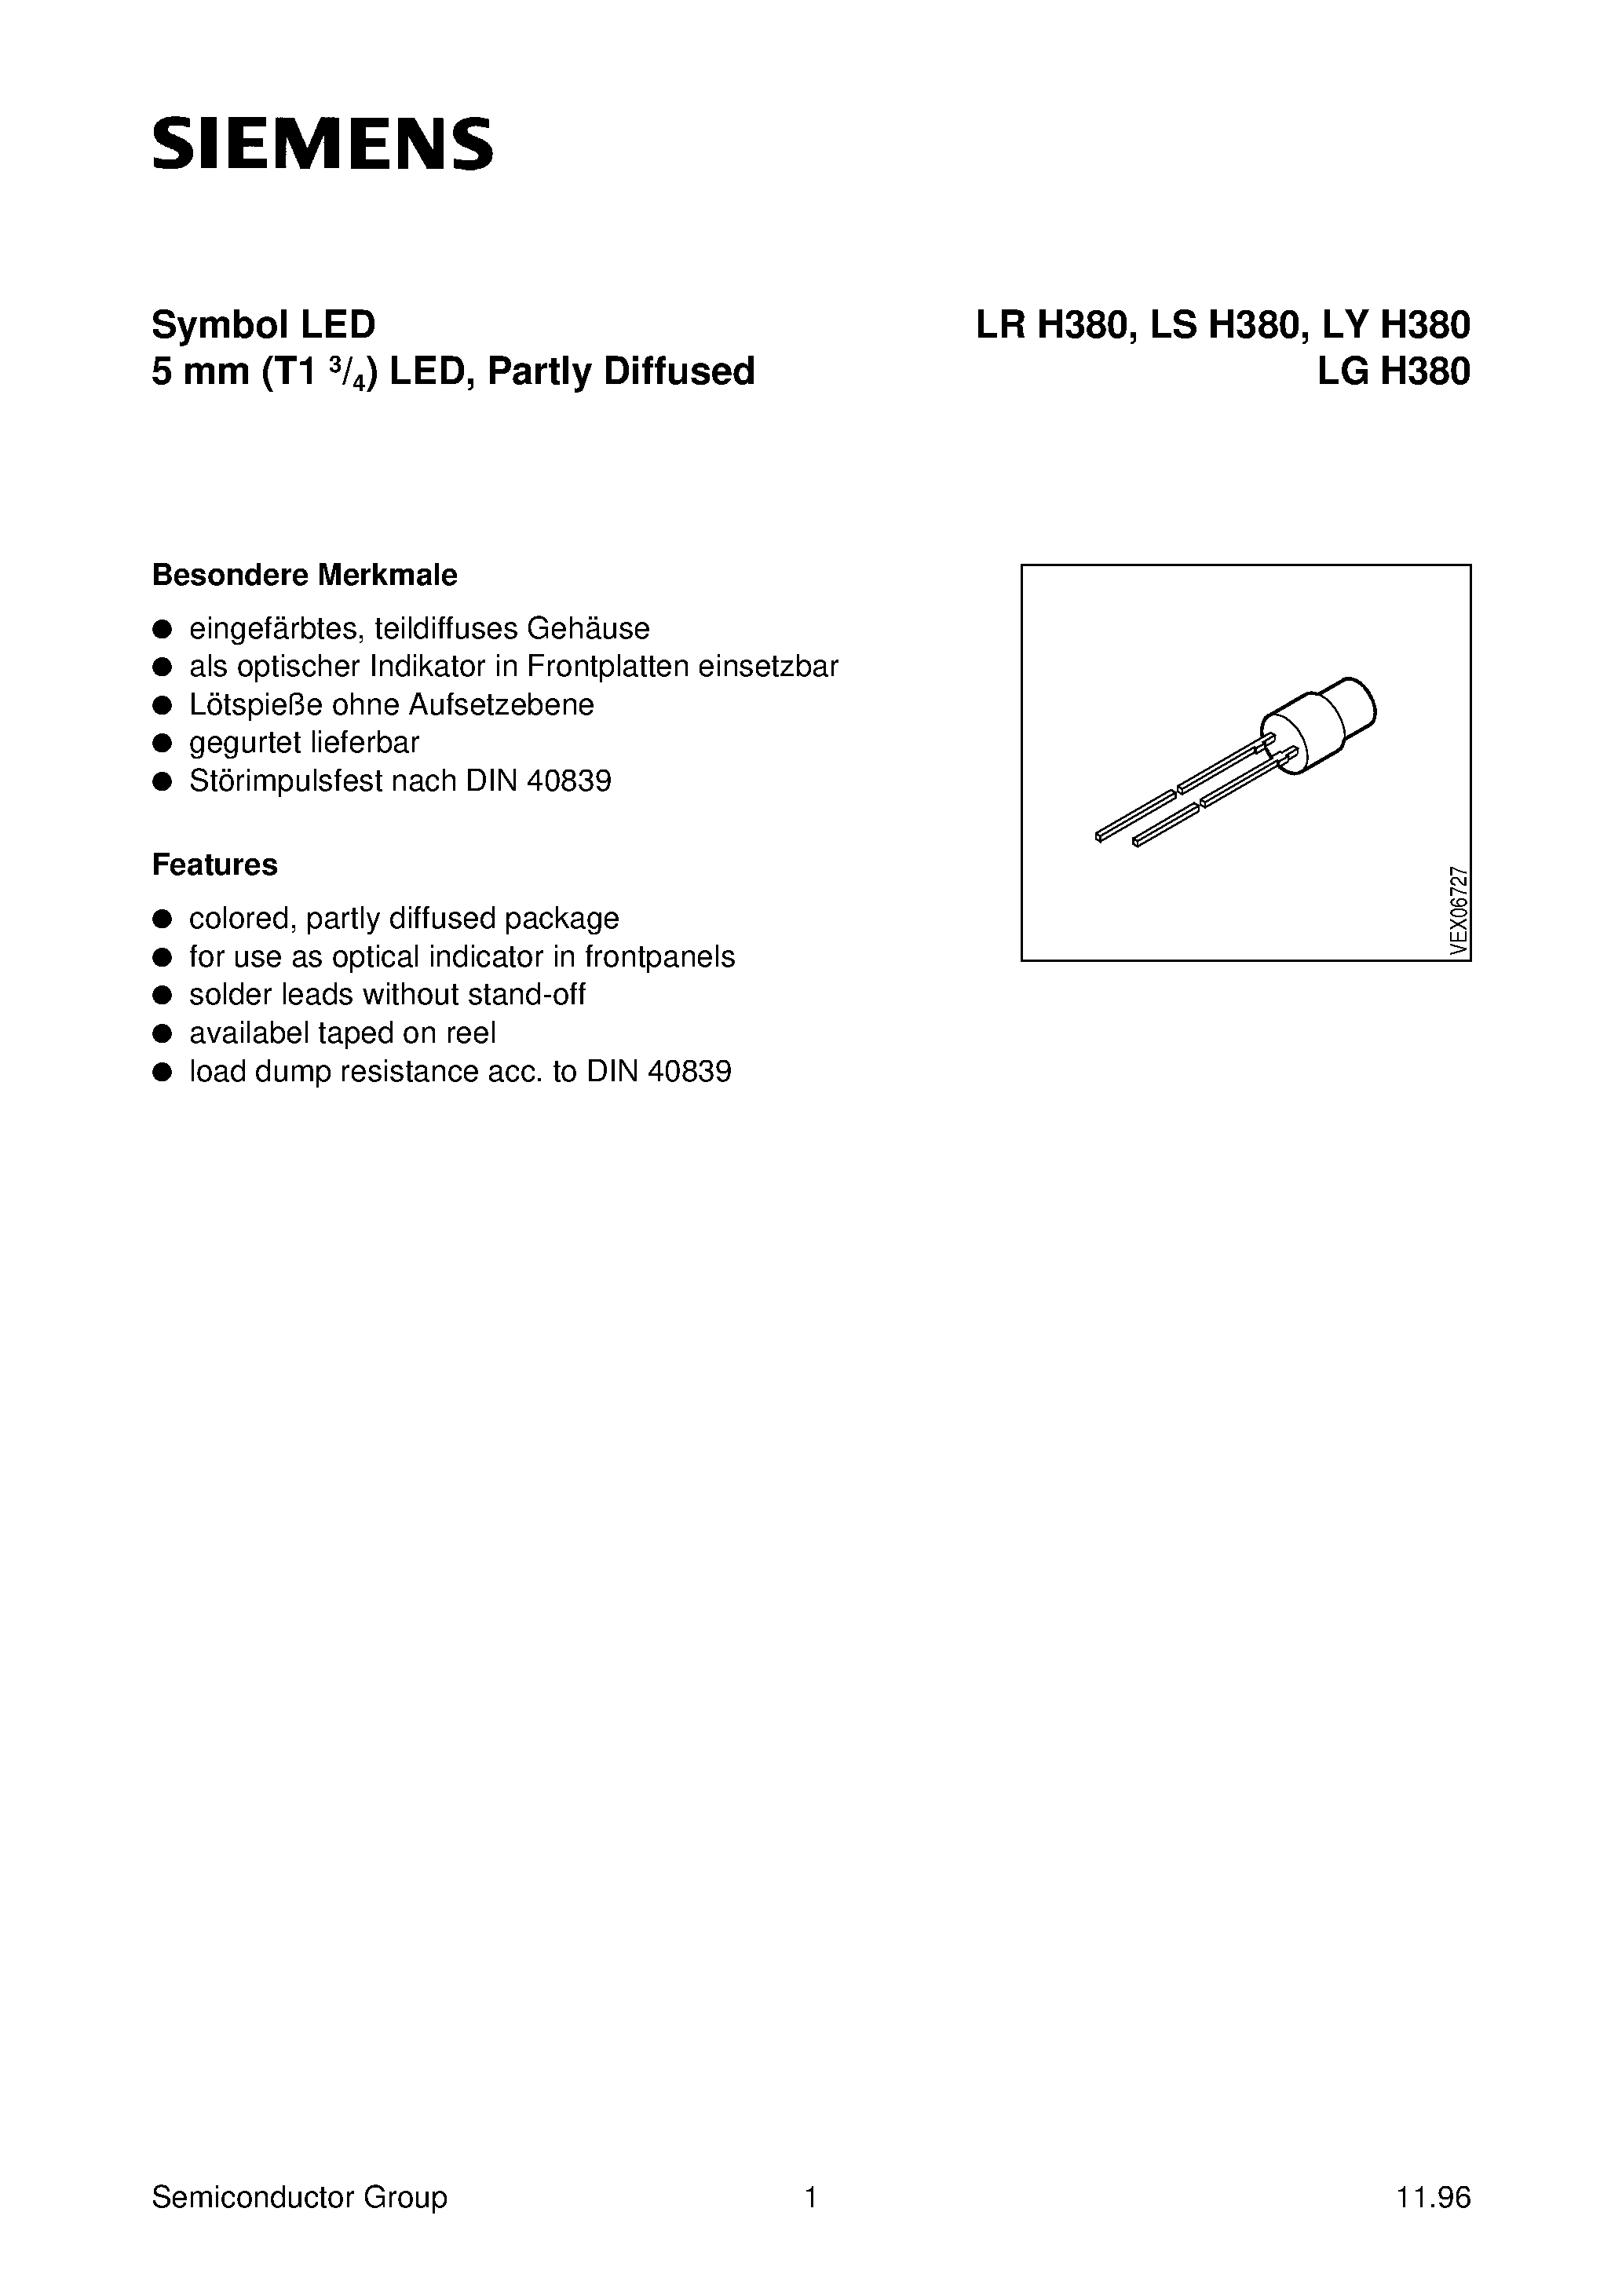 Datasheet LRH380 - Symbol LED 5 mm T1 3/4 LED / Partly Diffused page 1